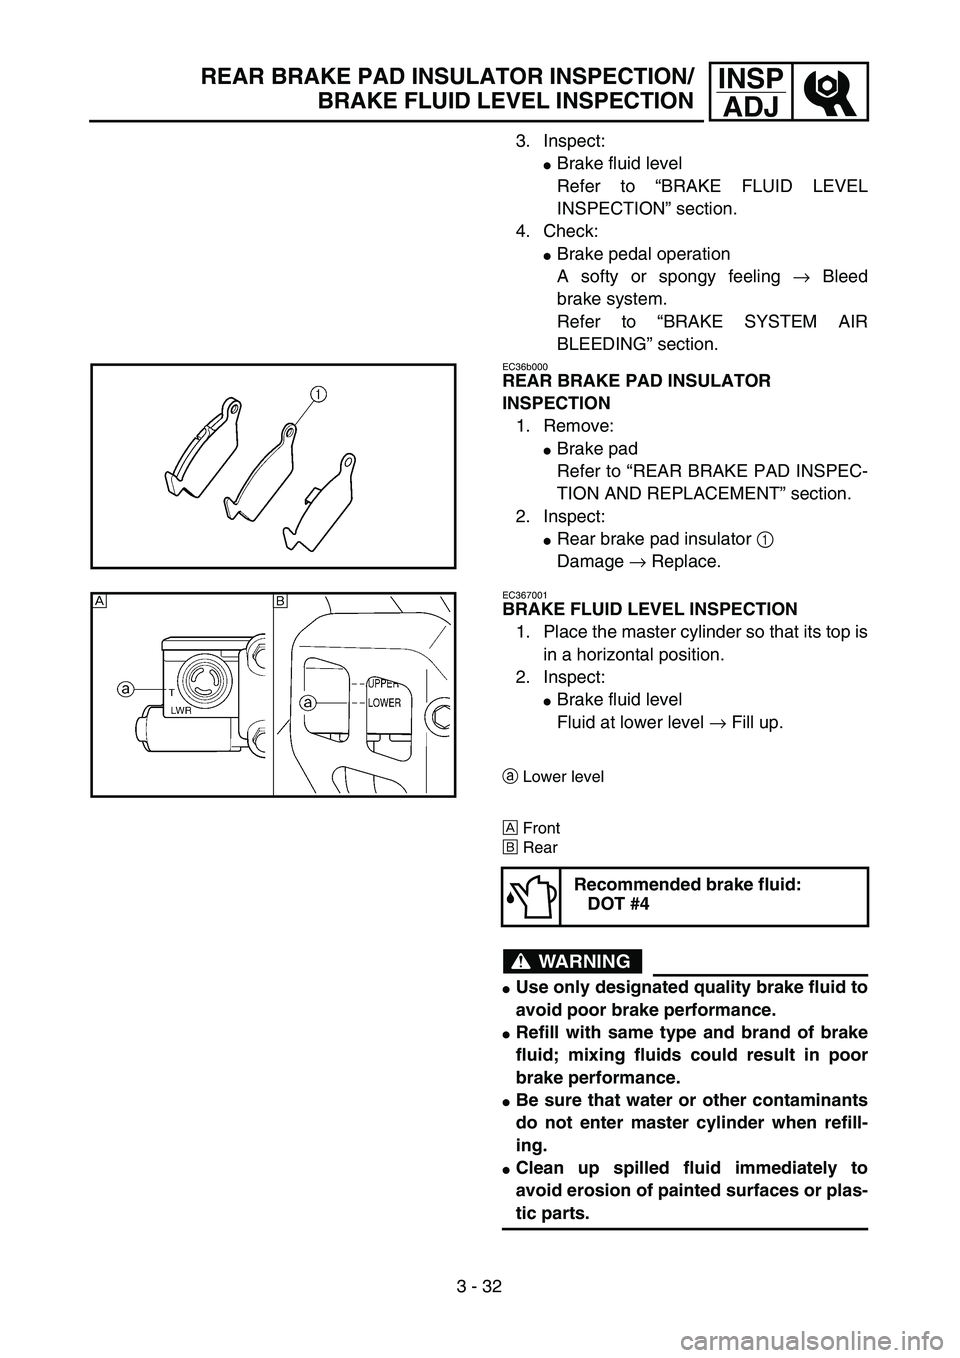 YAMAHA WR 426F 2002  Manuale de Empleo (in Spanish) 3 - 32
INSP
ADJREAR BRAKE PAD INSULATOR INSPECTION/
BRAKE FLUID LEVEL INSPECTION
3. Inspect:
Brake fluid level
Refer to “BRAKE FLUID LEVEL
INSPECTION” section.
4. Check:
Brake pedal operation
A 